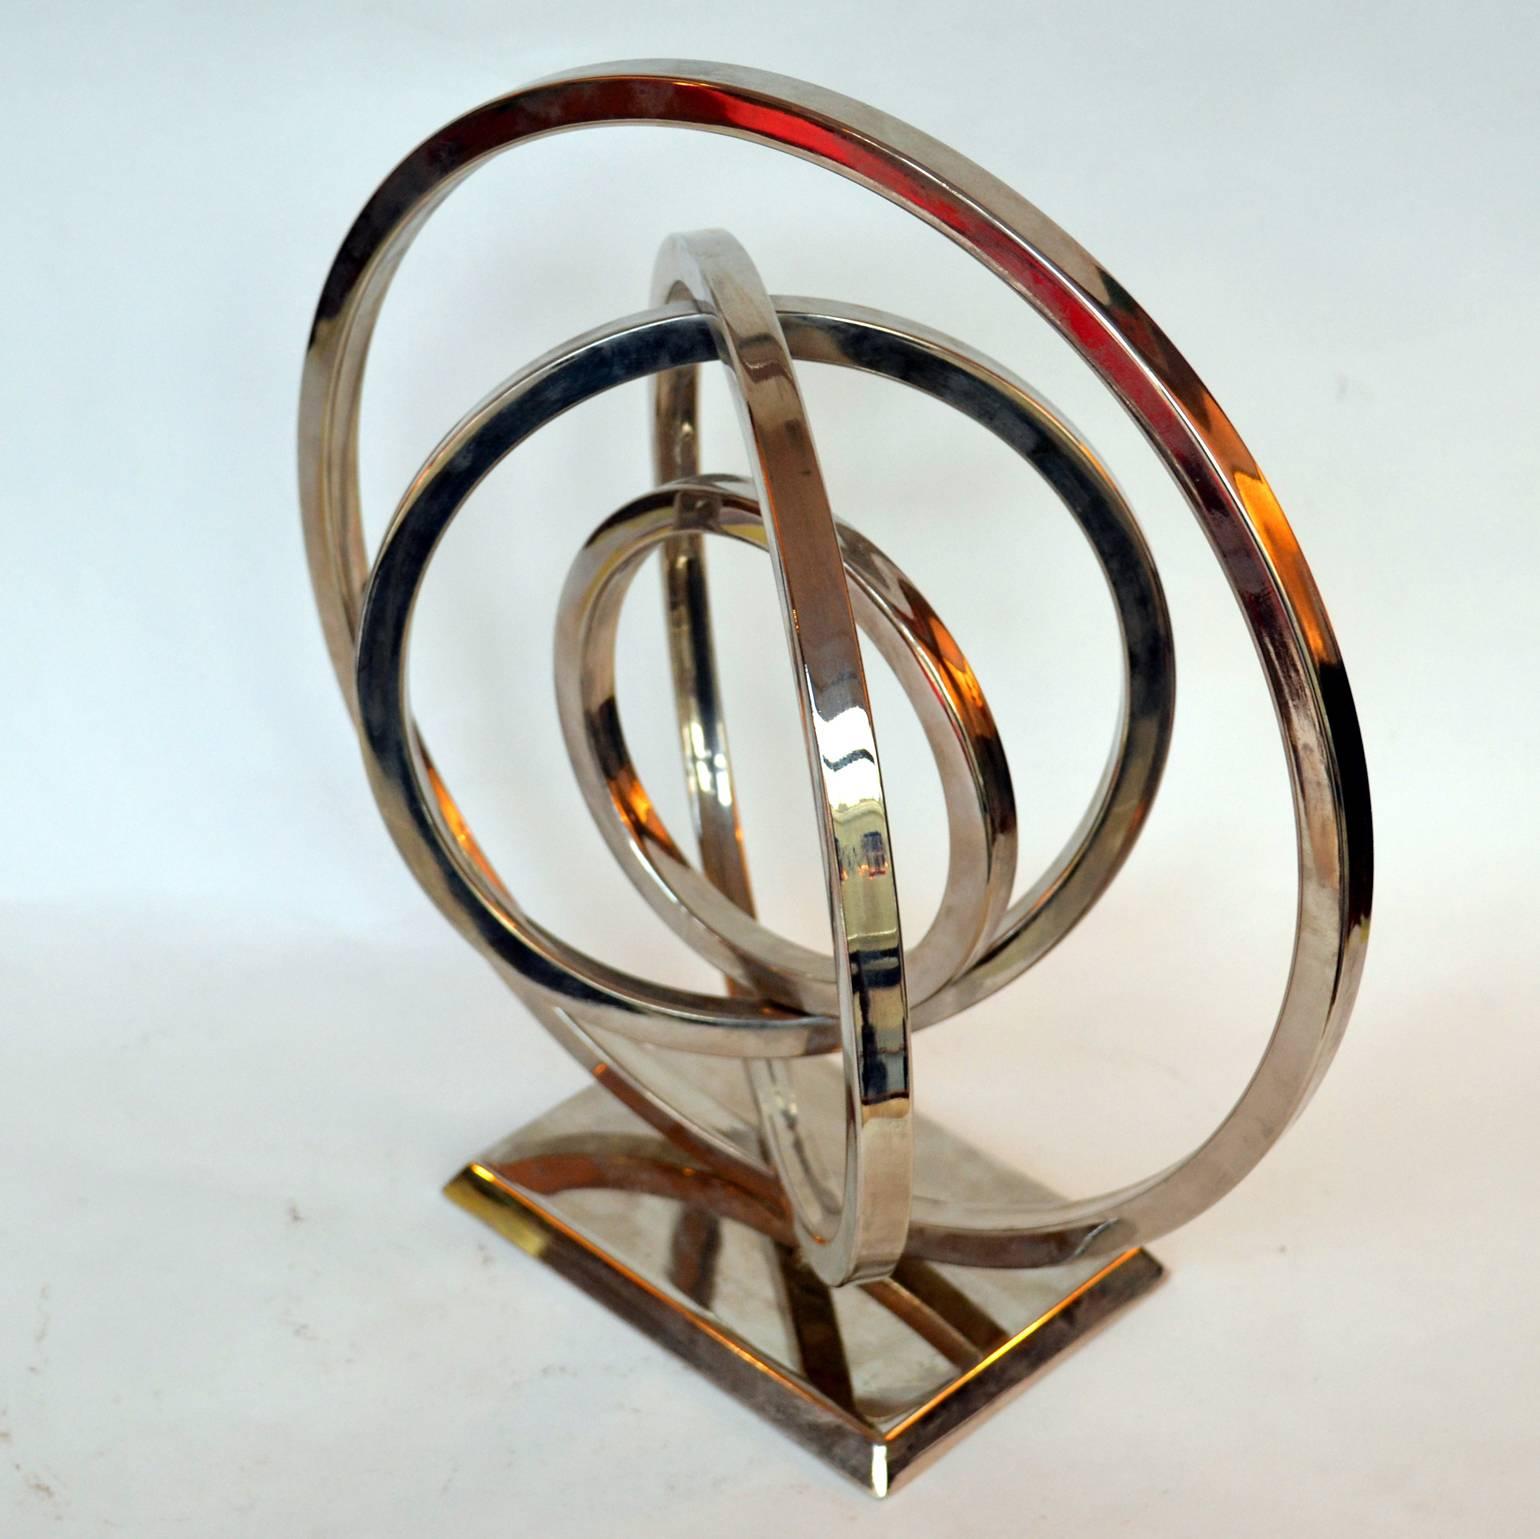 rings sculpture